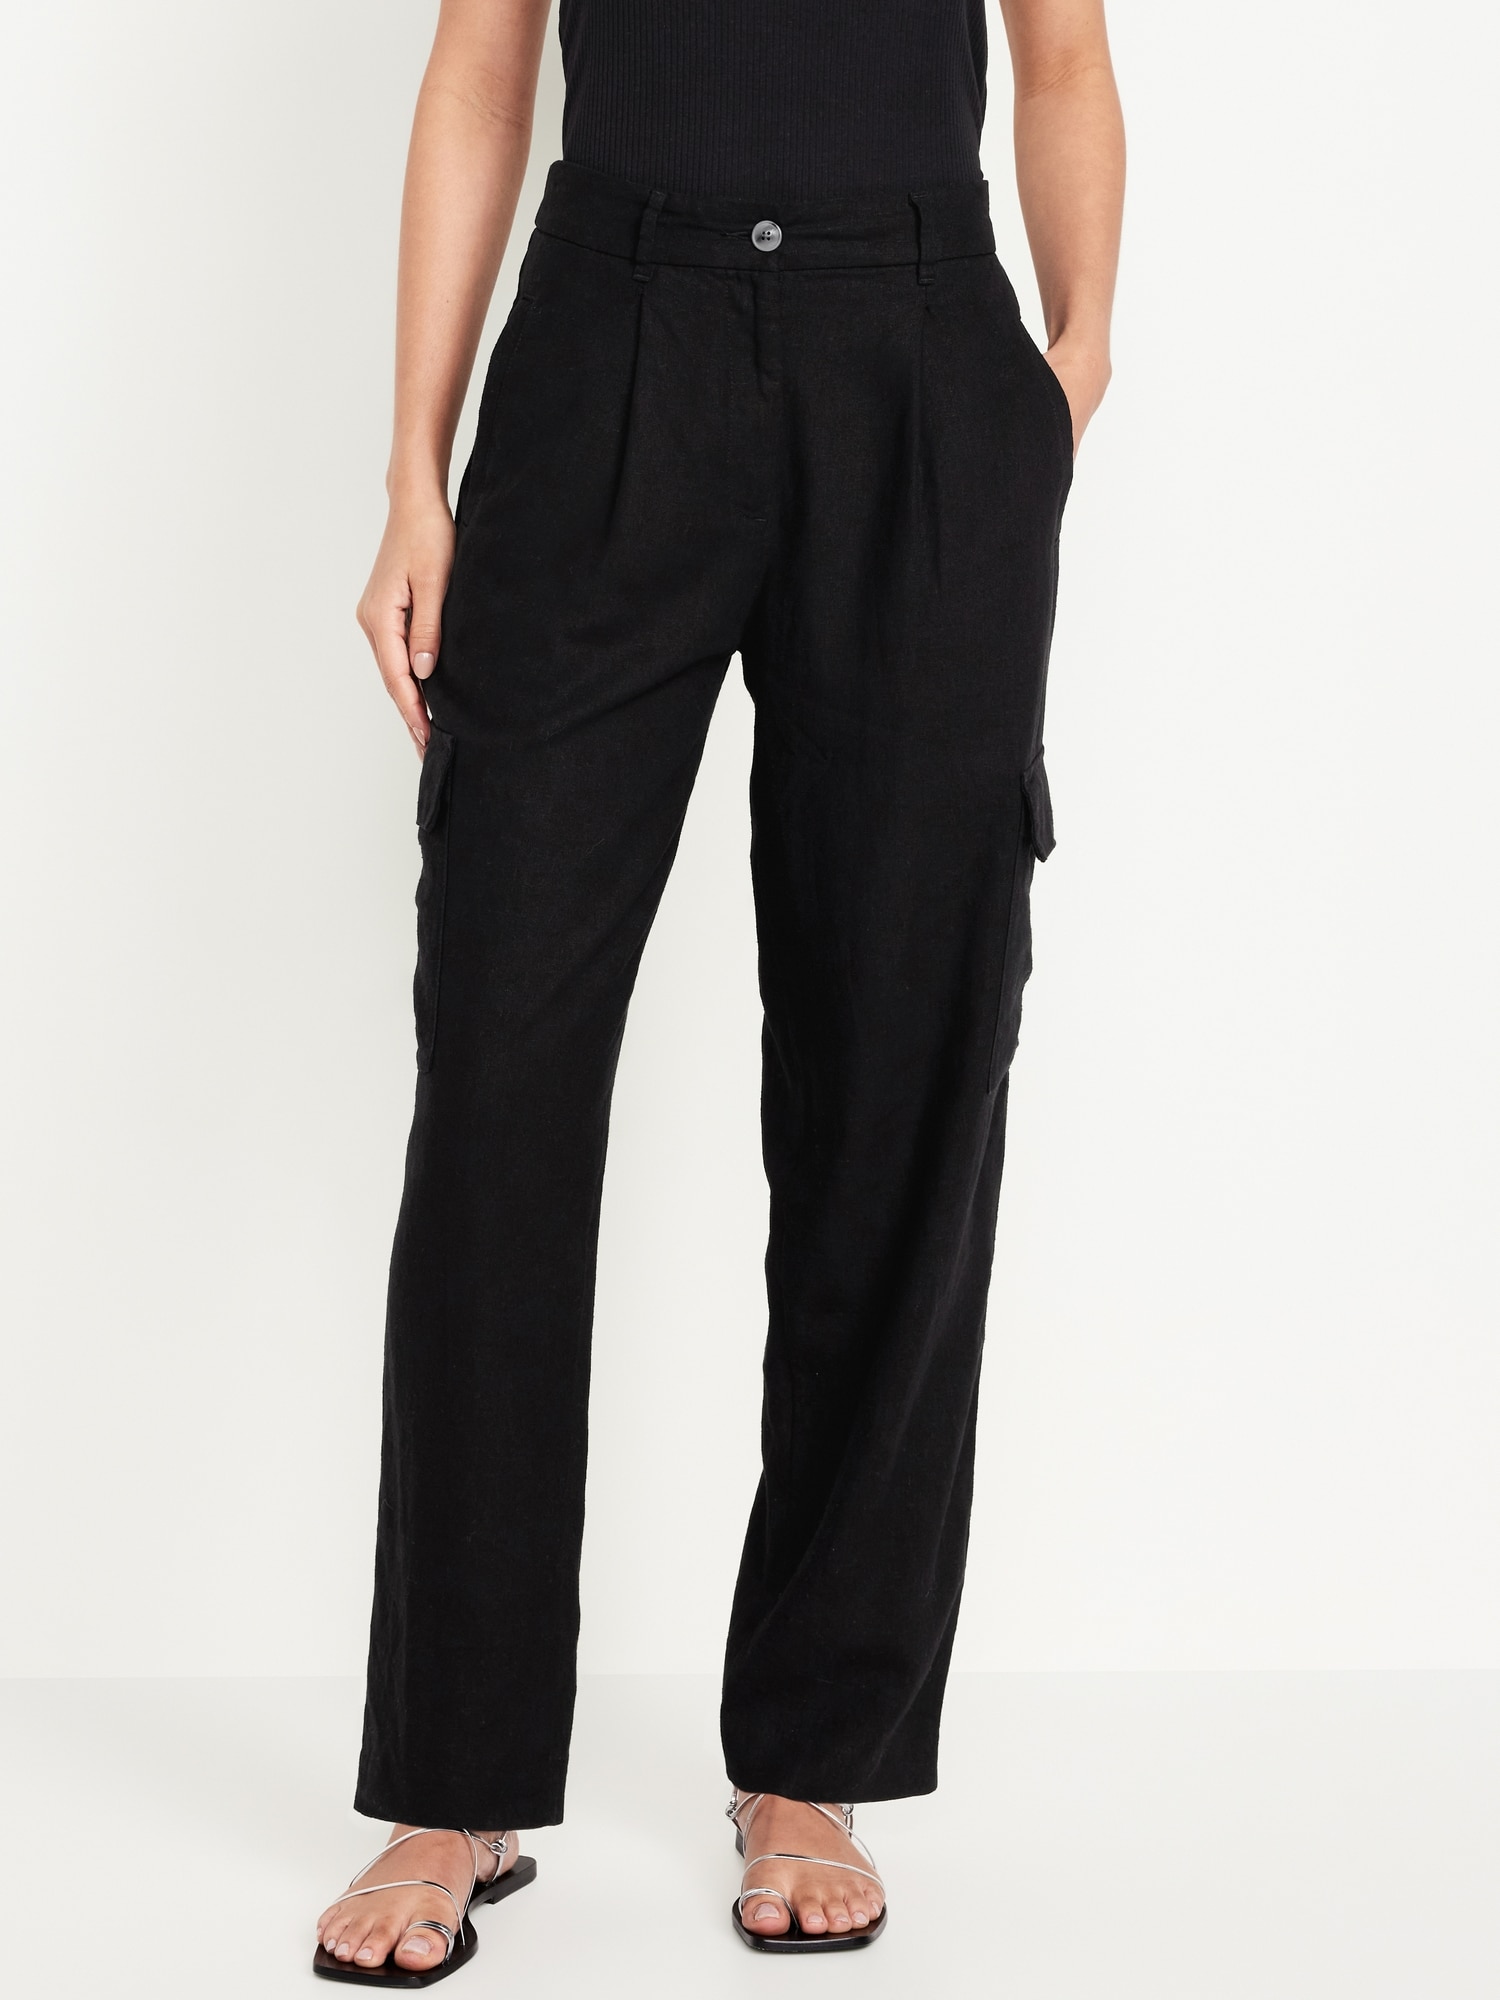 Capri Pants for Women Cotton Linen Plus Size Cargo Pants Capris Elastic  High Waisted 3/4 Slacks with Multi Pockets (XX-Large, Gray)